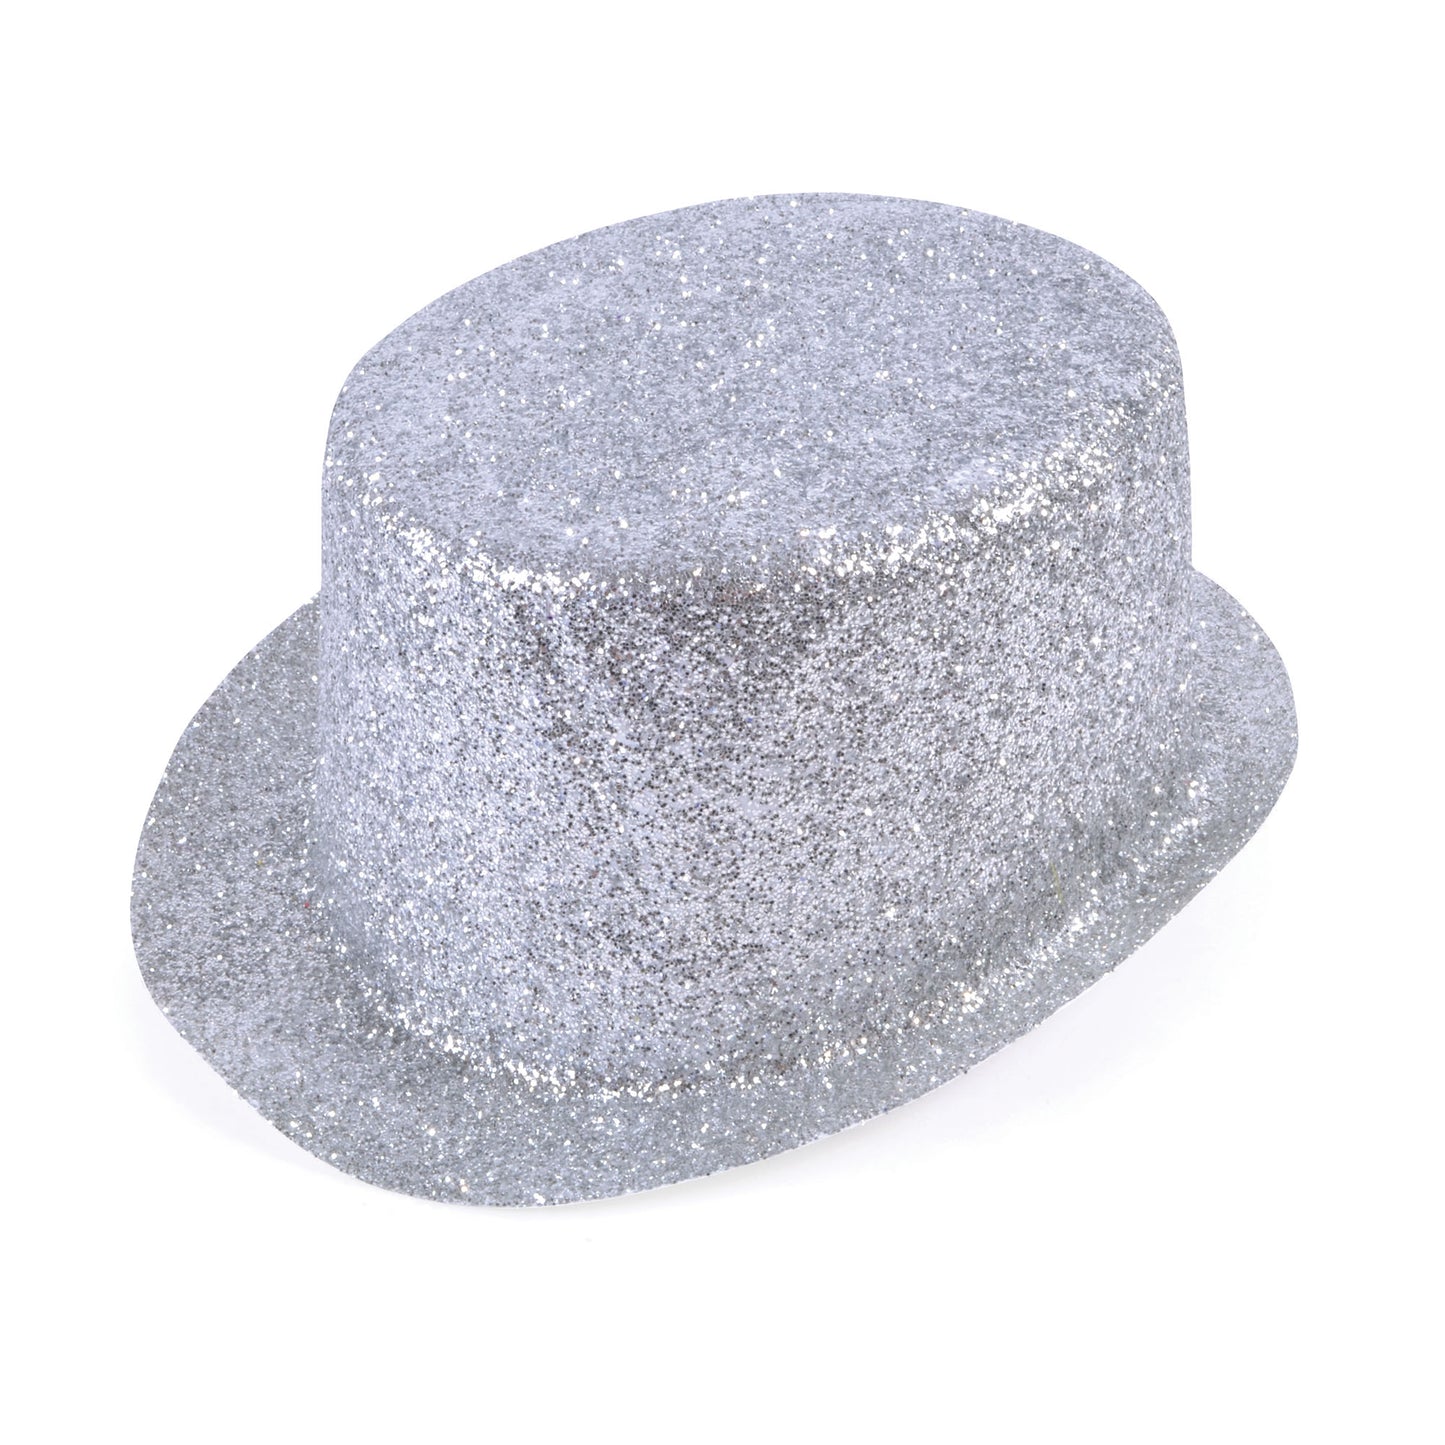 Glitter Top Hat